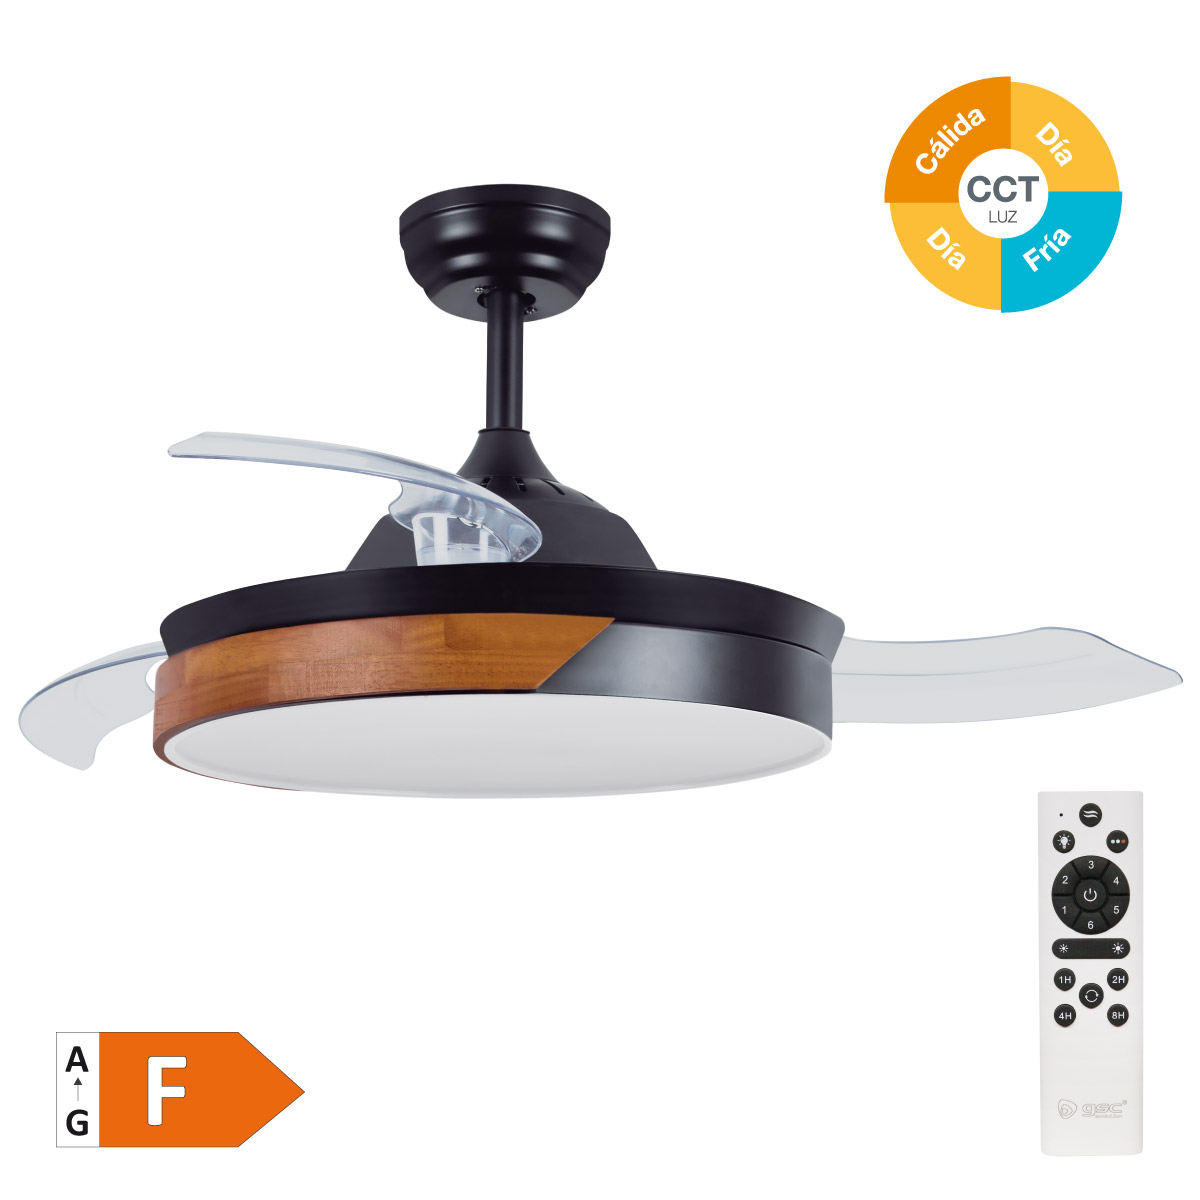 Likasi 42' DC ceiling fan with remote control CCT 3 retractable blades transparent Walnut/Black